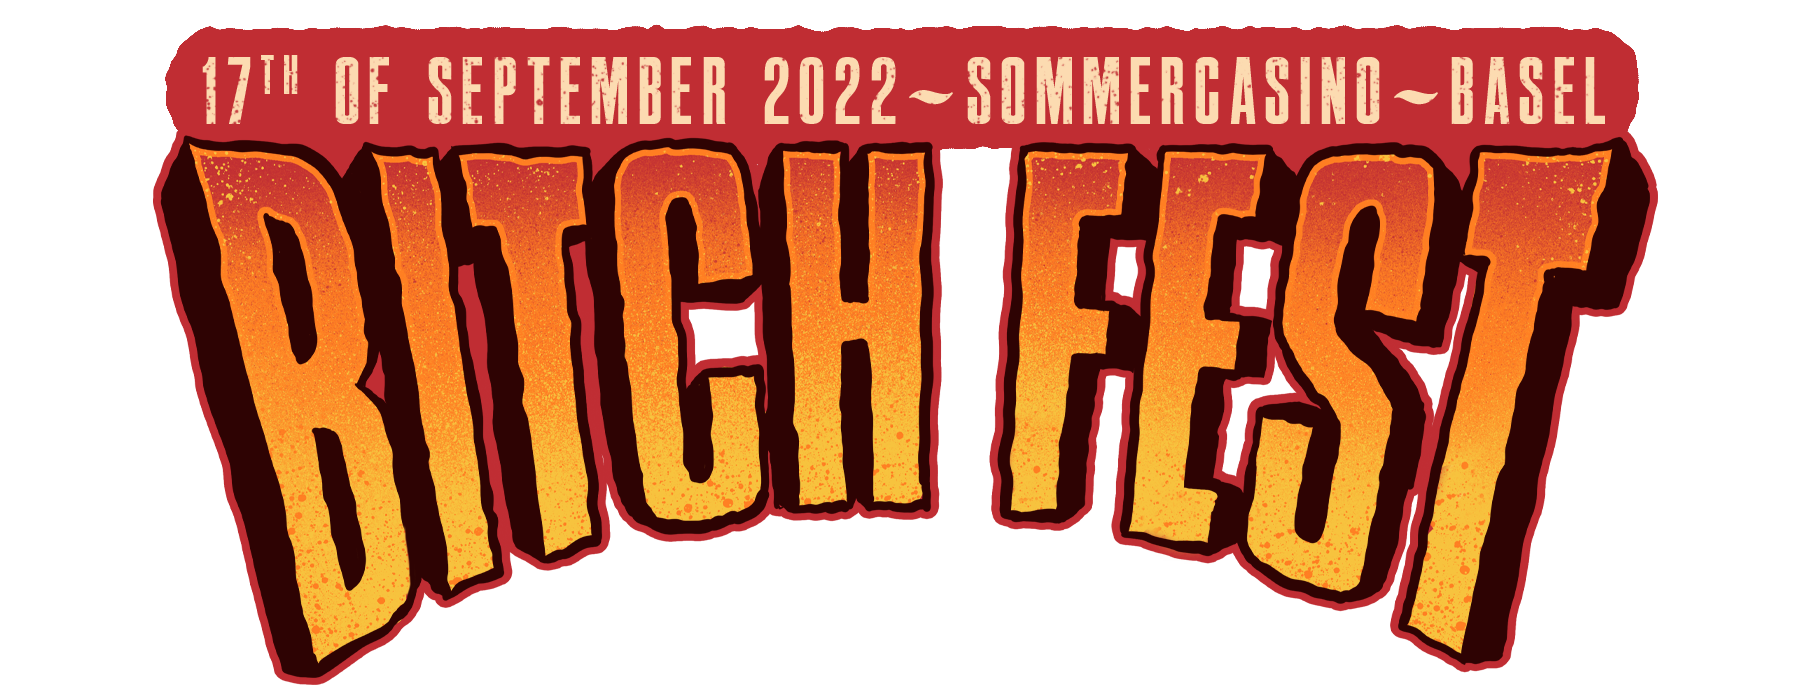 Bitch Fest – 31.10.20